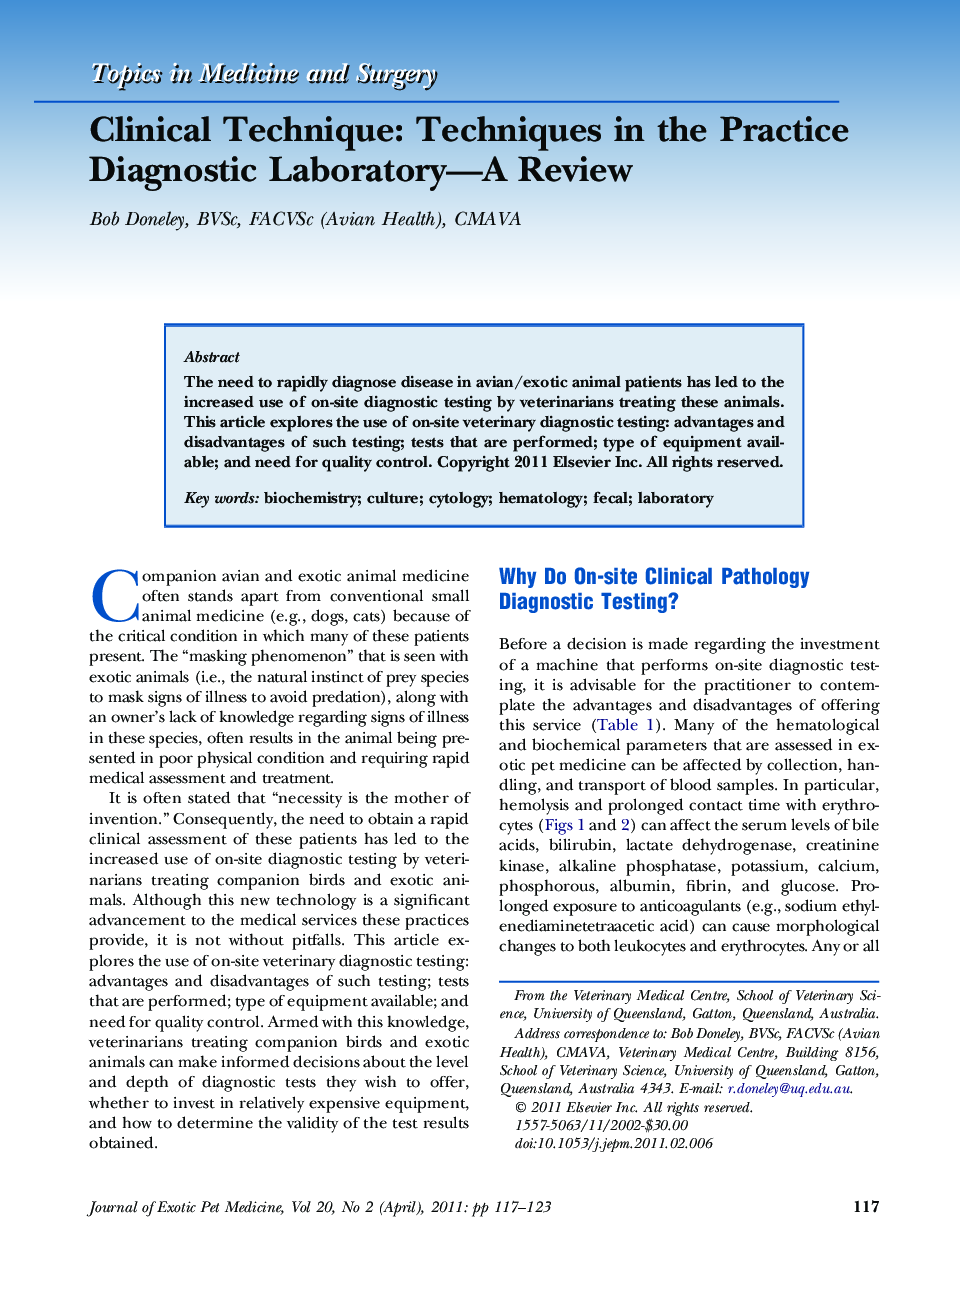 Clinical Technique: Techniques in the Practice Diagnostic Laboratory—A Review